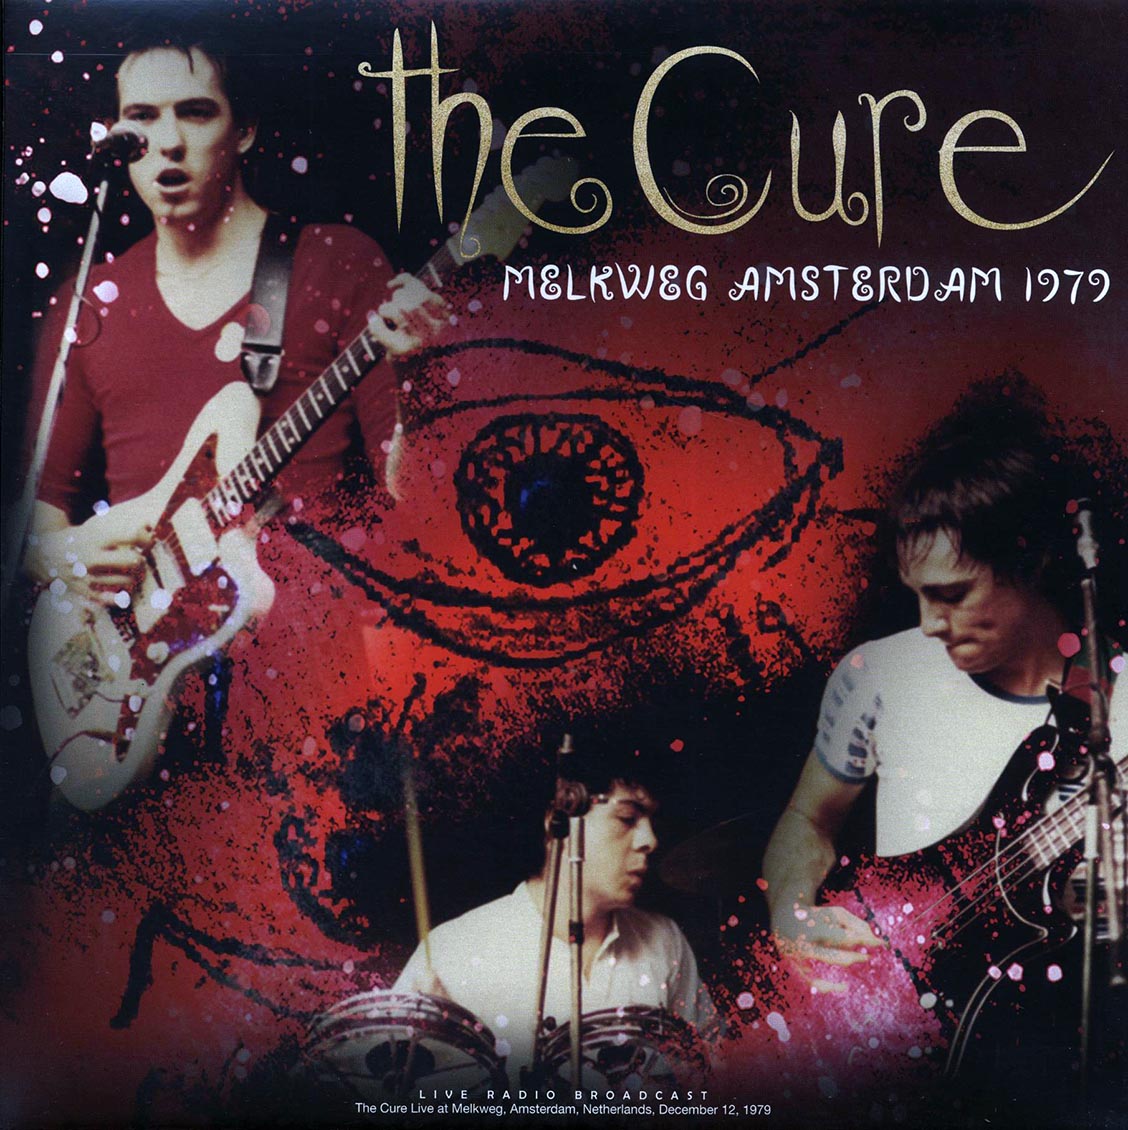 The Cure - Melkweg Amsterdam 1979 (180g) - Vinyl LP